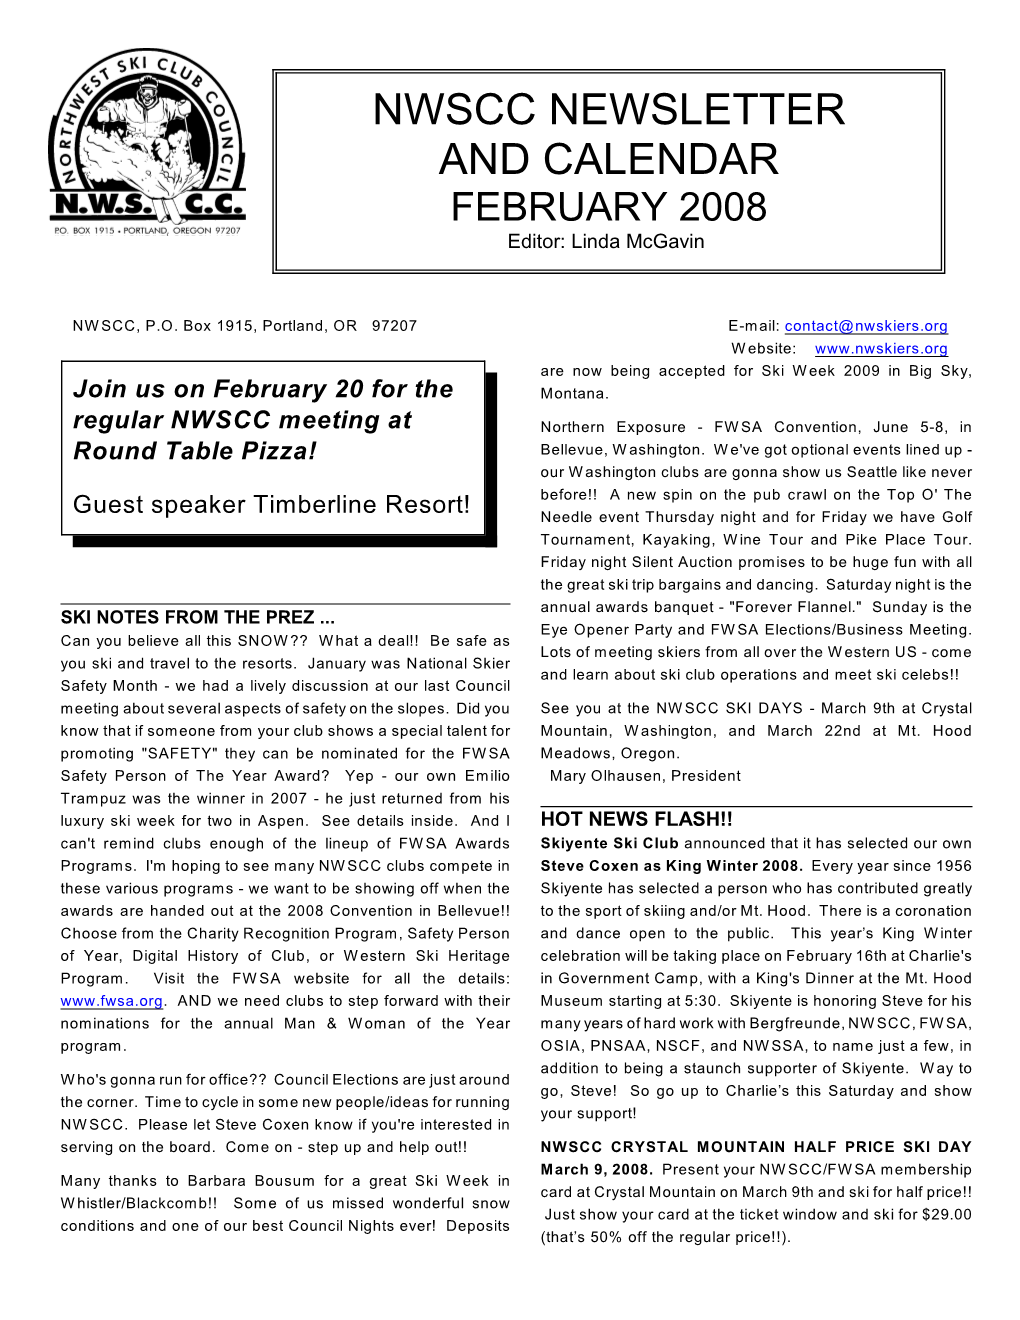 FEBRUARY 2008 Editor: Linda Mcgavin